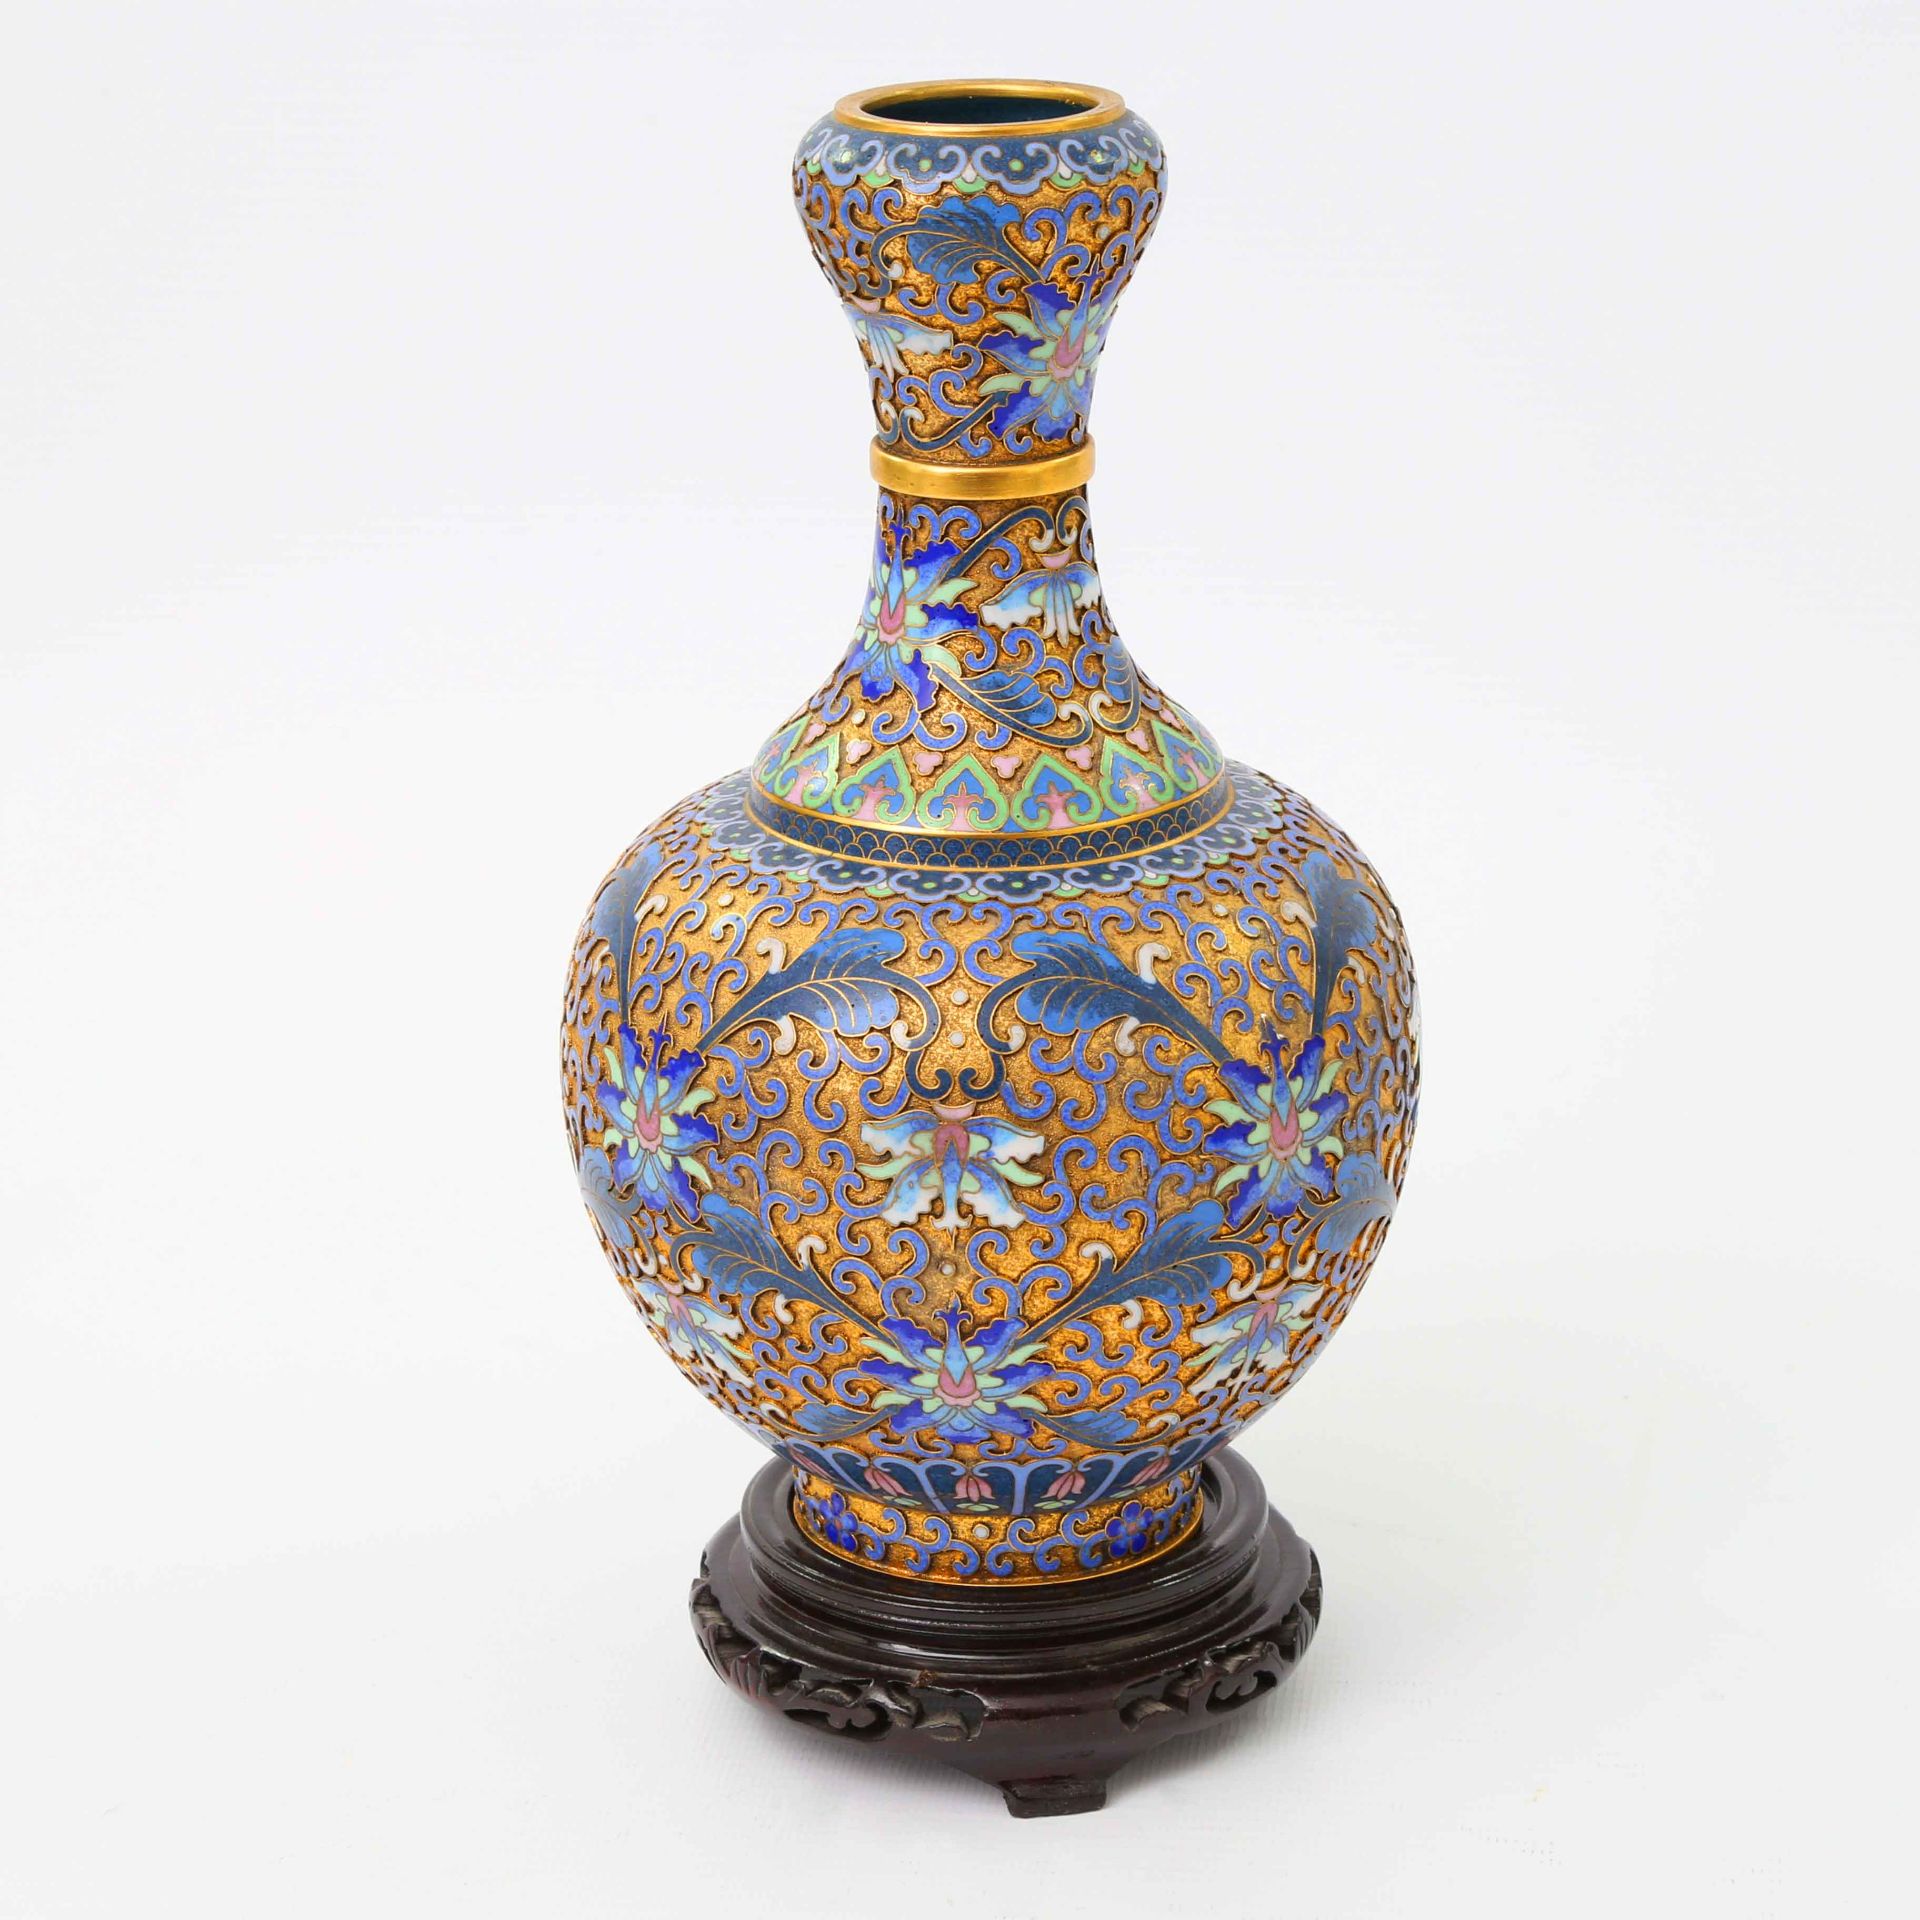 Email-Cloisonné Vase. CHINA, 20. Jh. gtebauchte Form mit hohem, engem Hals. Reliefmuster von